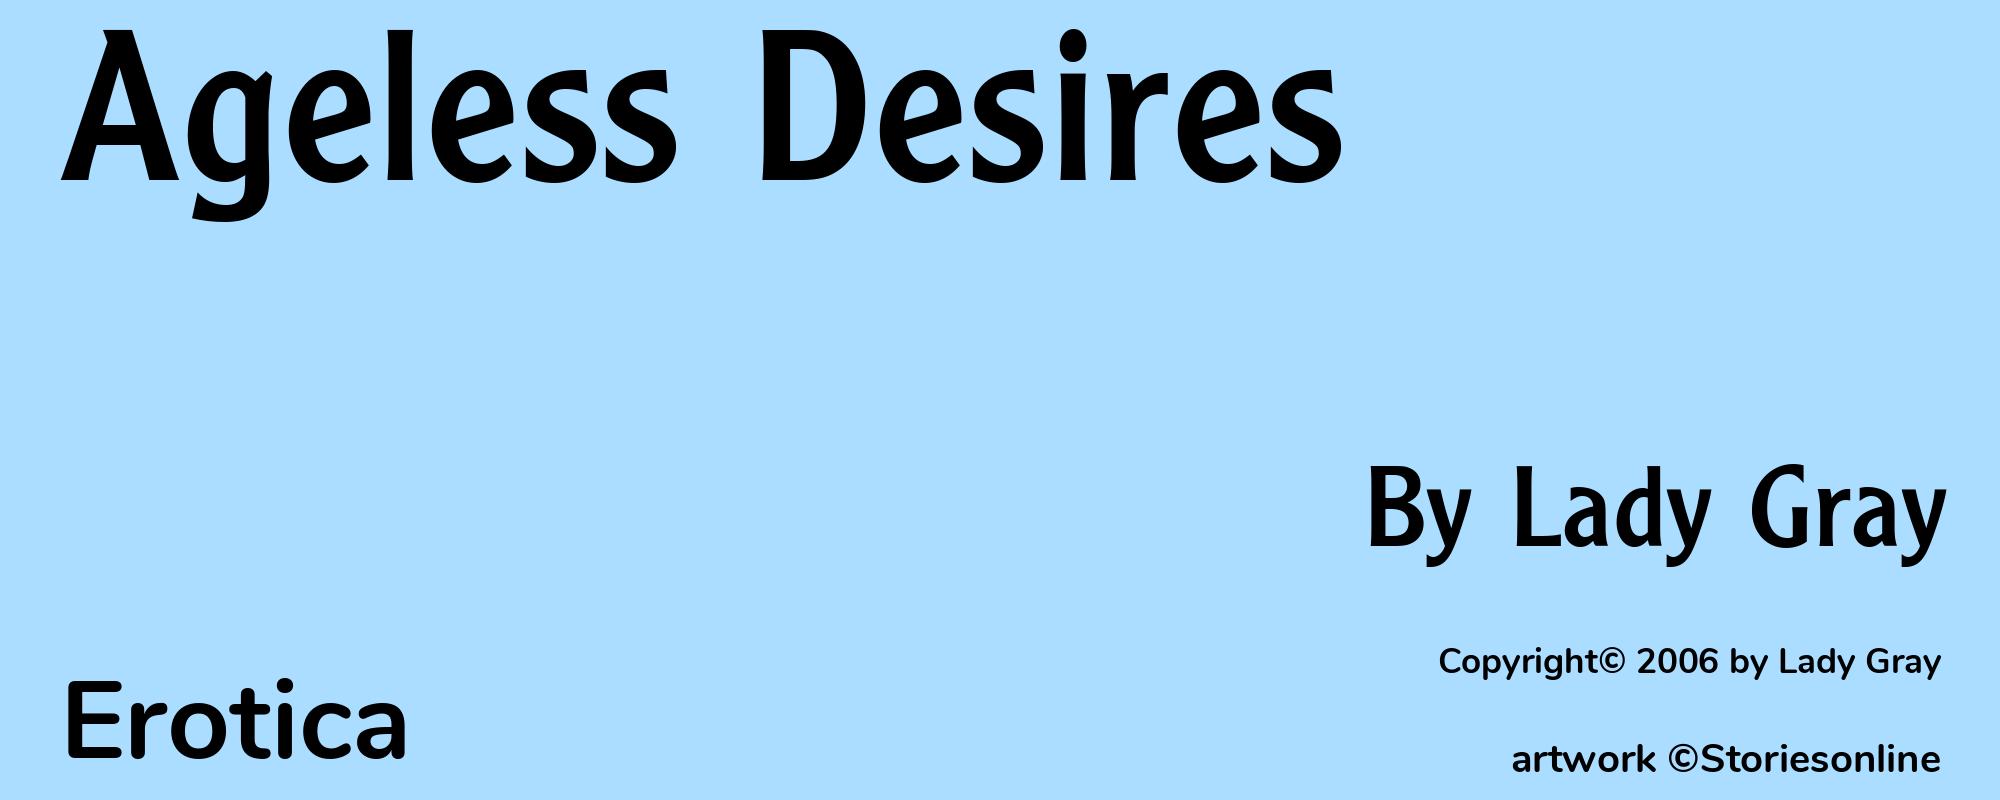 Ageless Desires - Cover